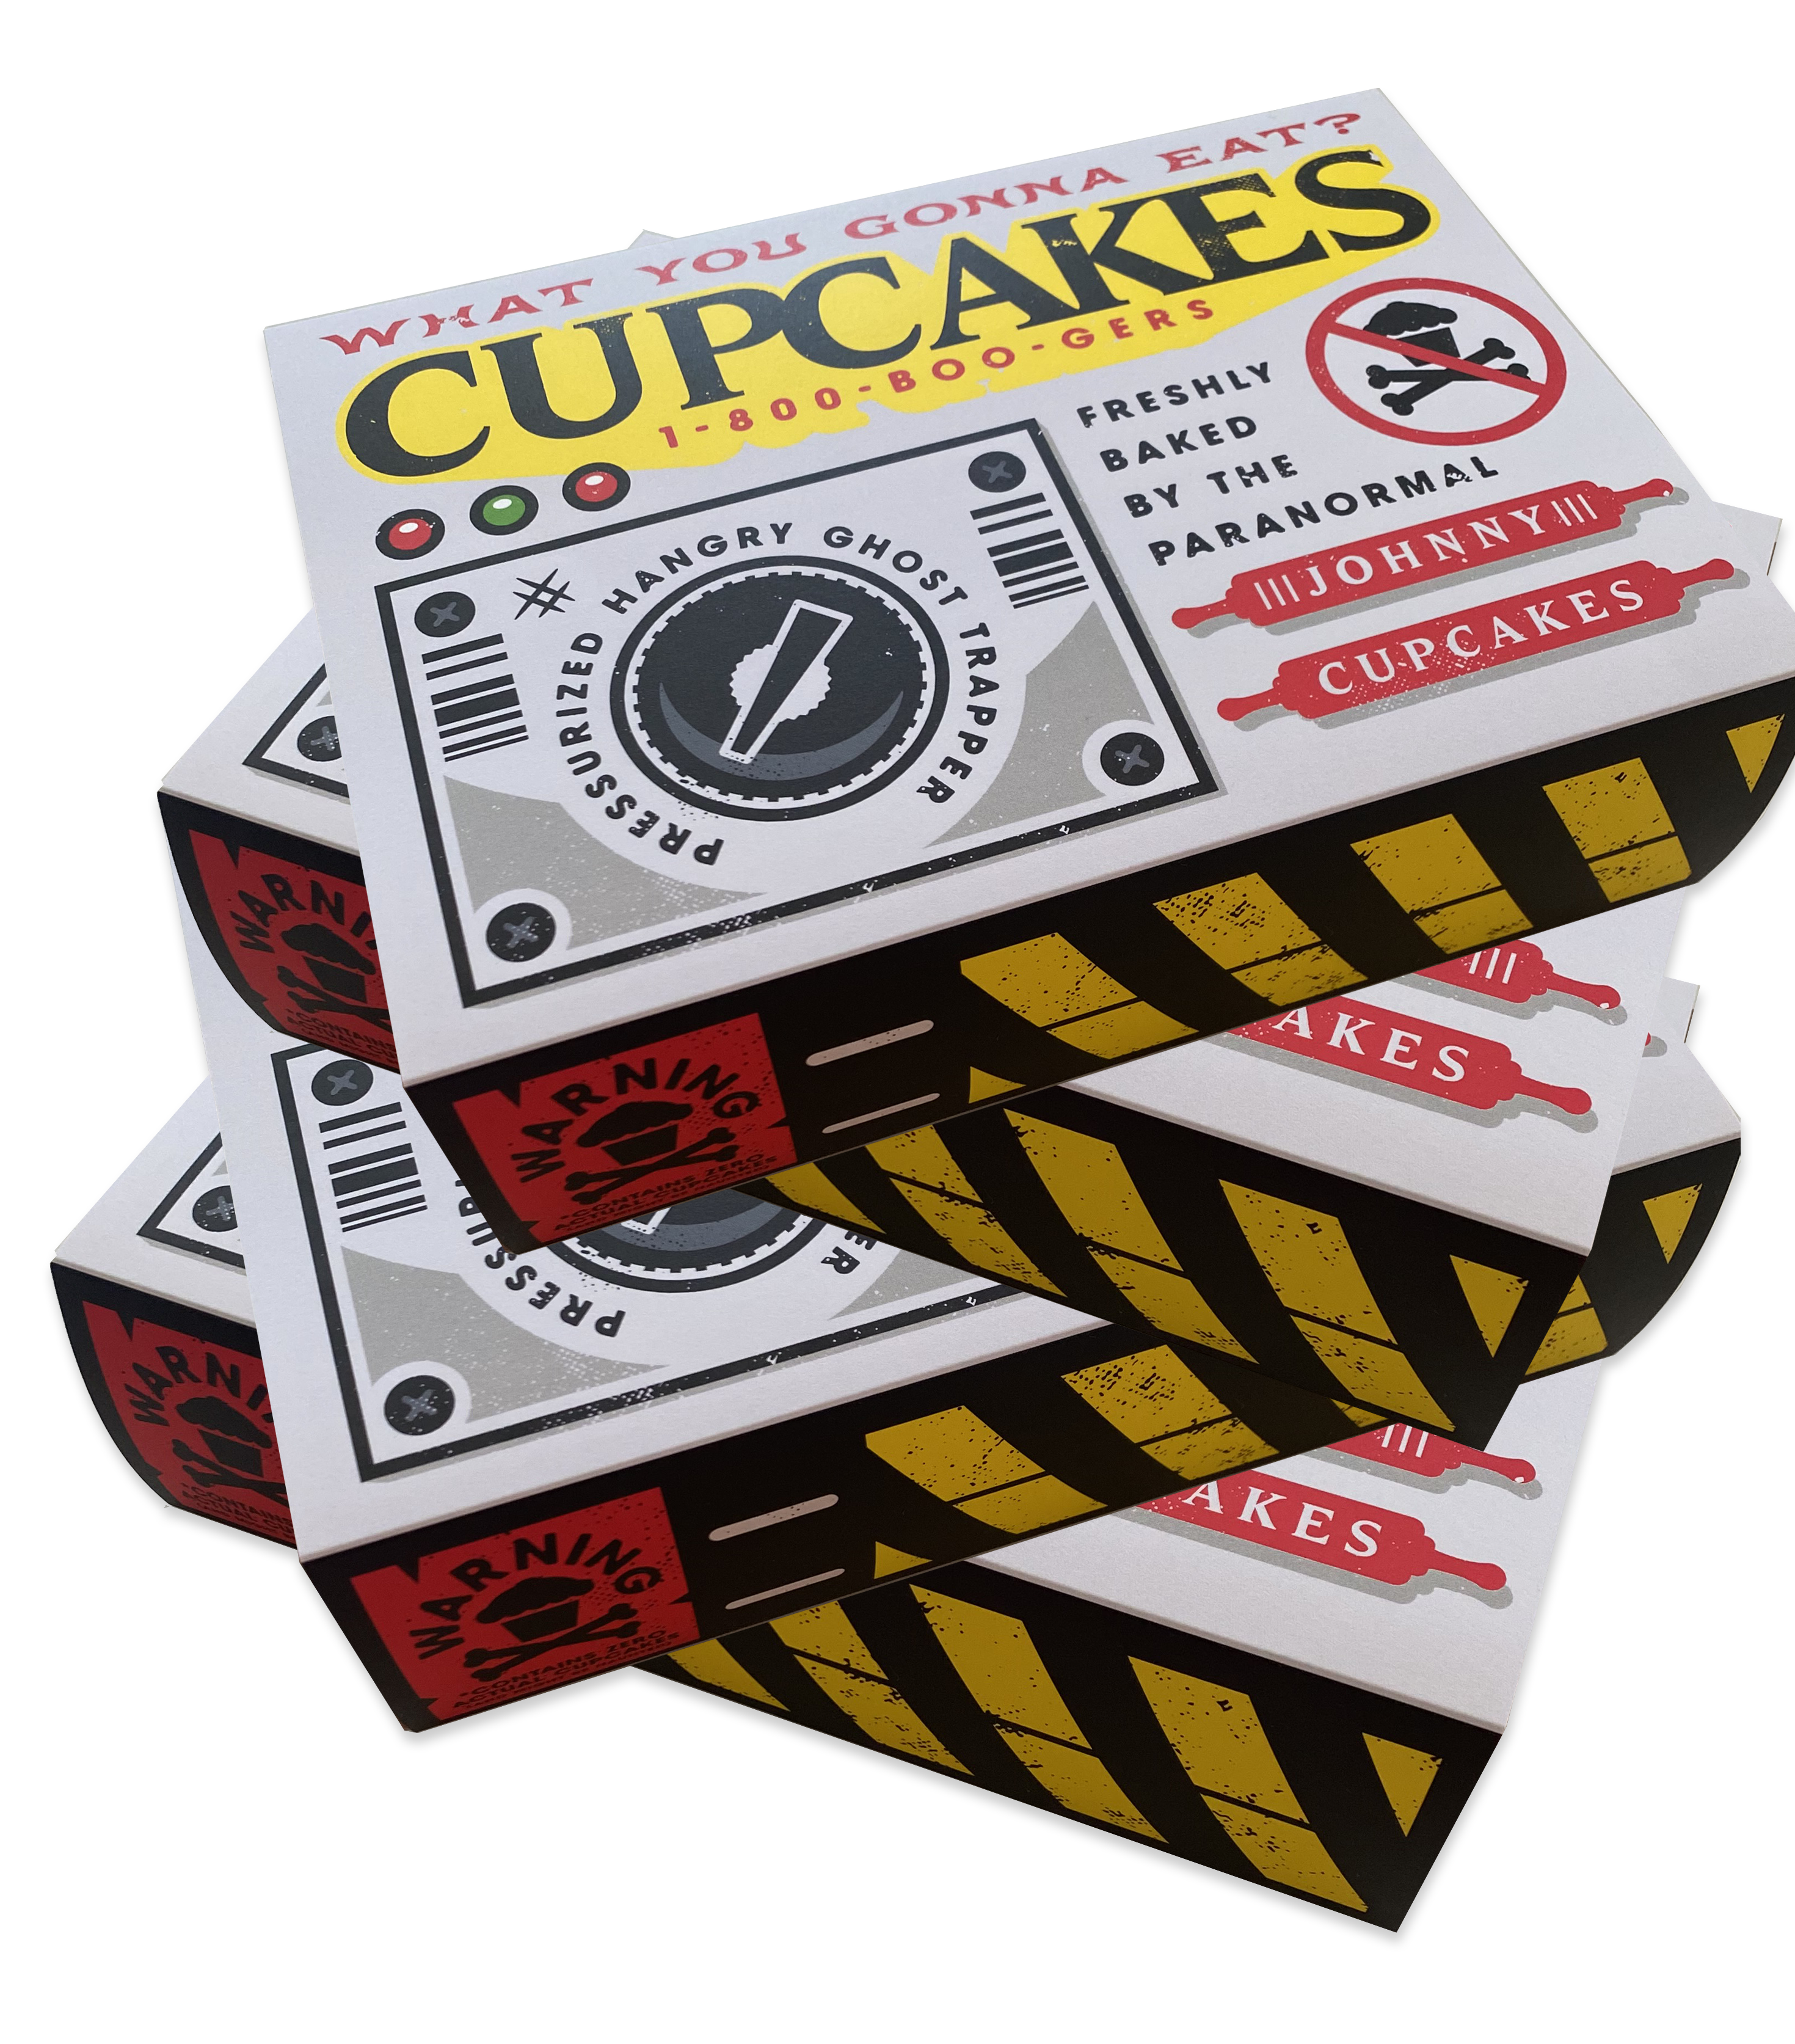 Cakebusters Bundle Deal - 4 Tees w/ Stickers + Packaging